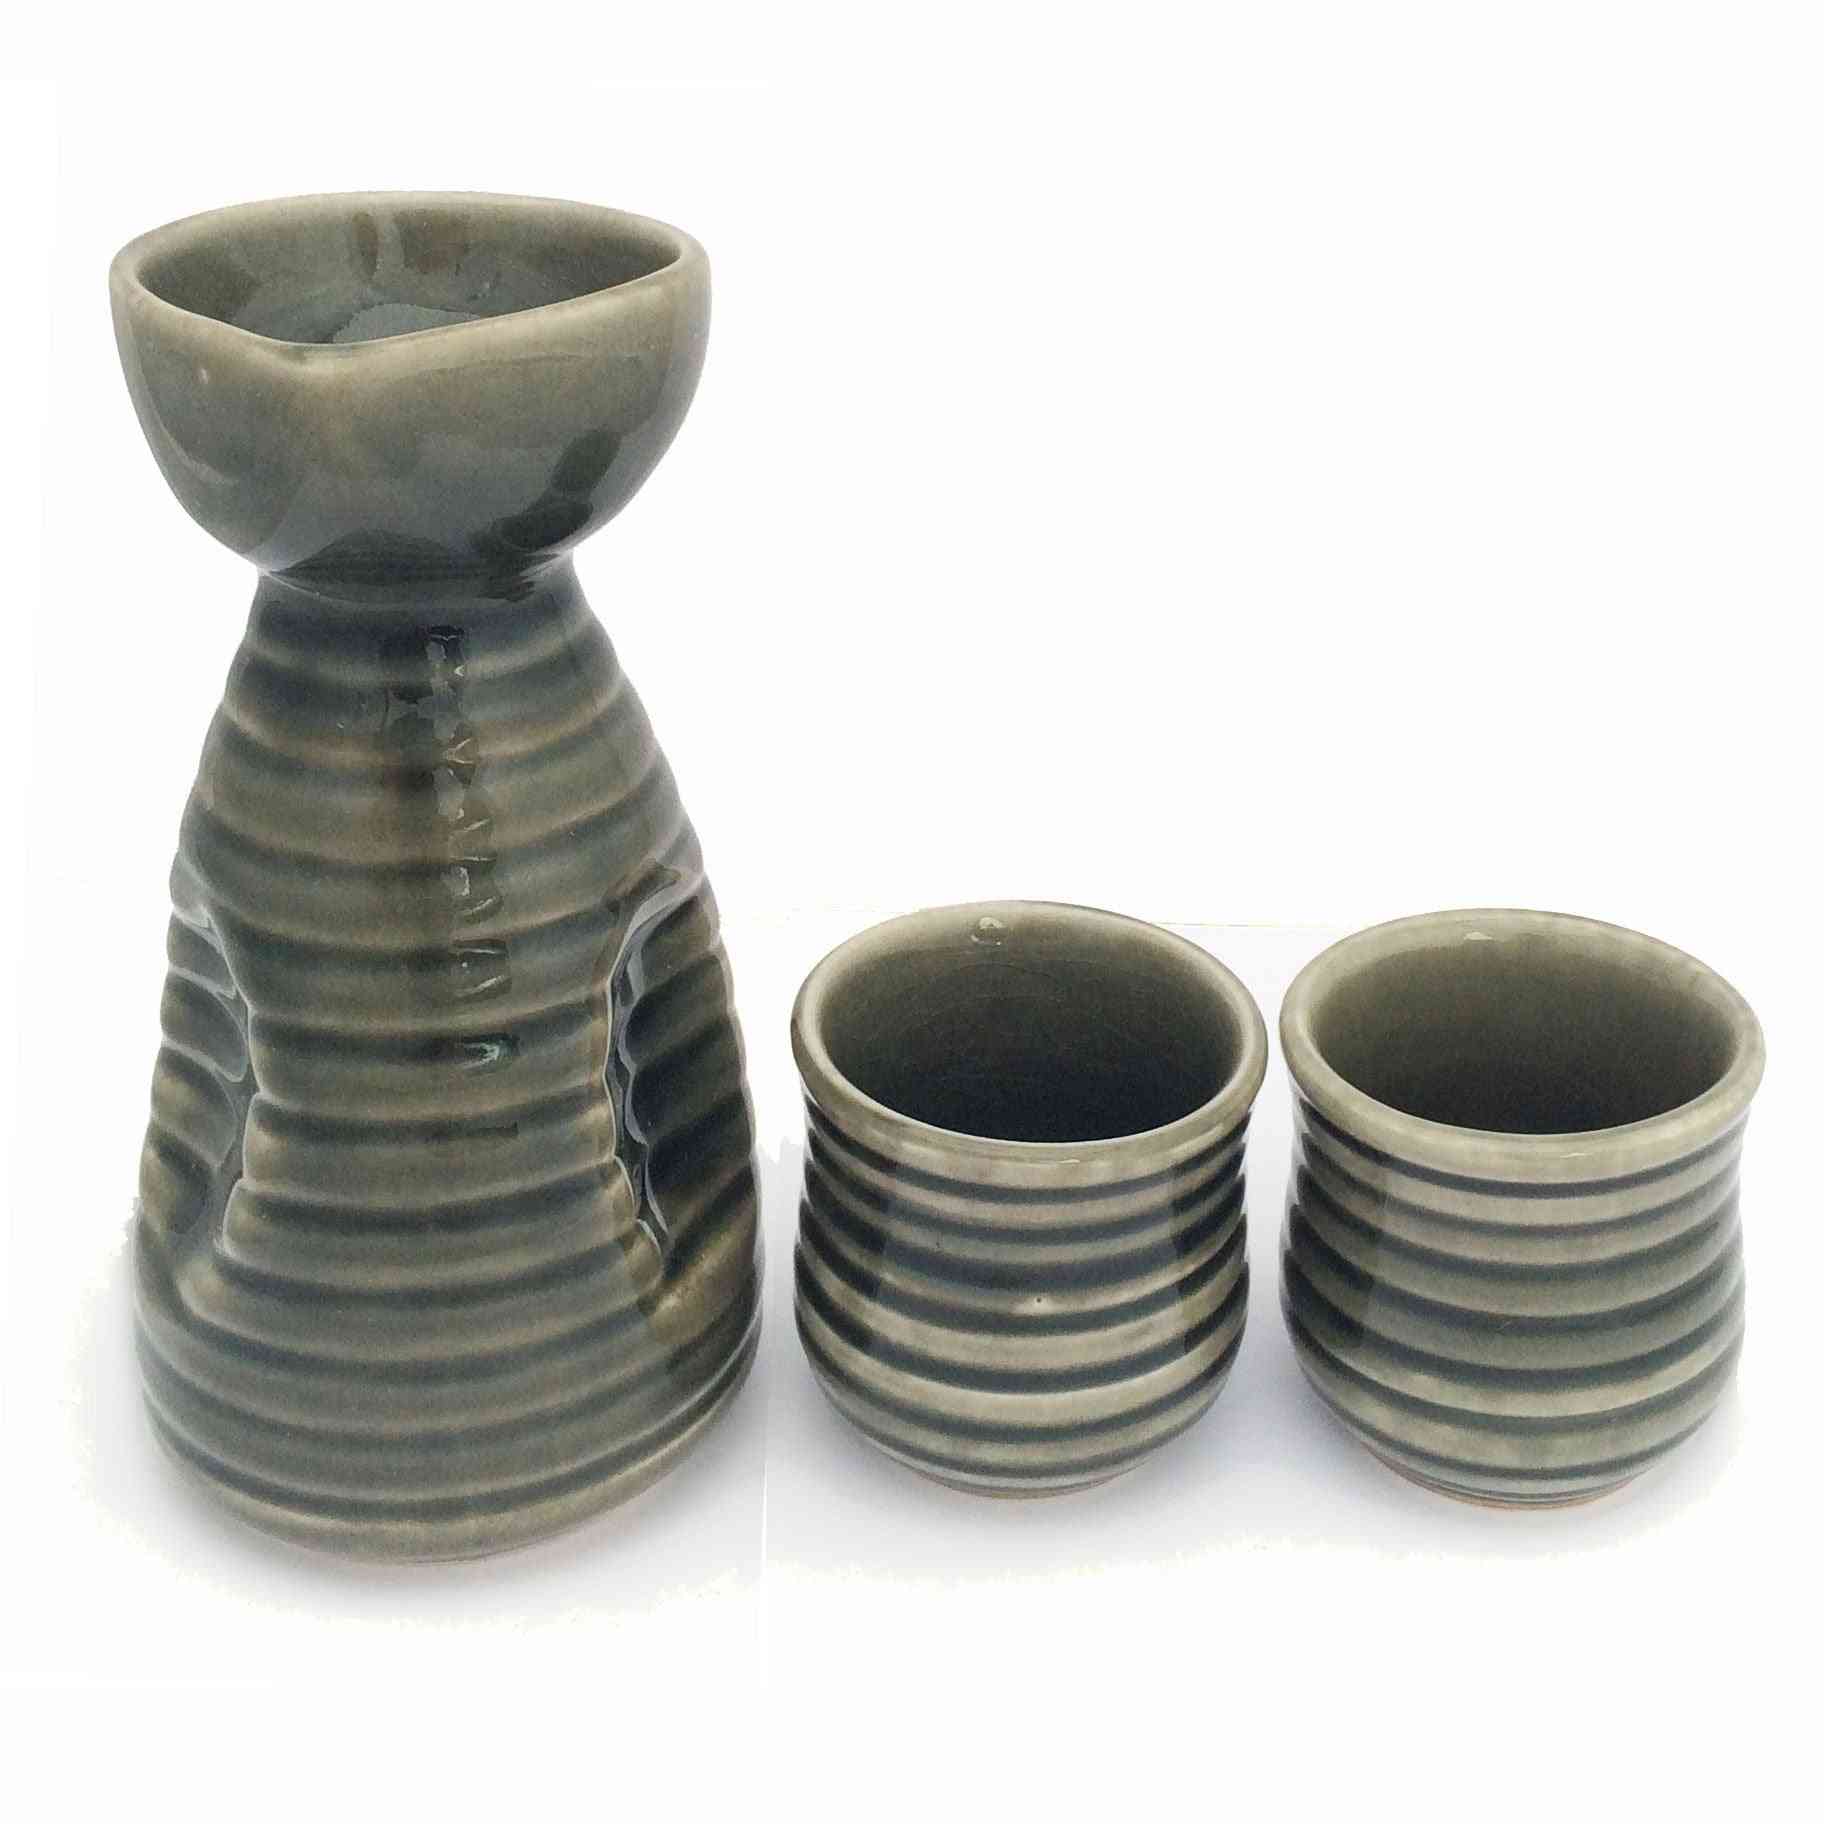 Handmade Green Sake Set With 2 Cups